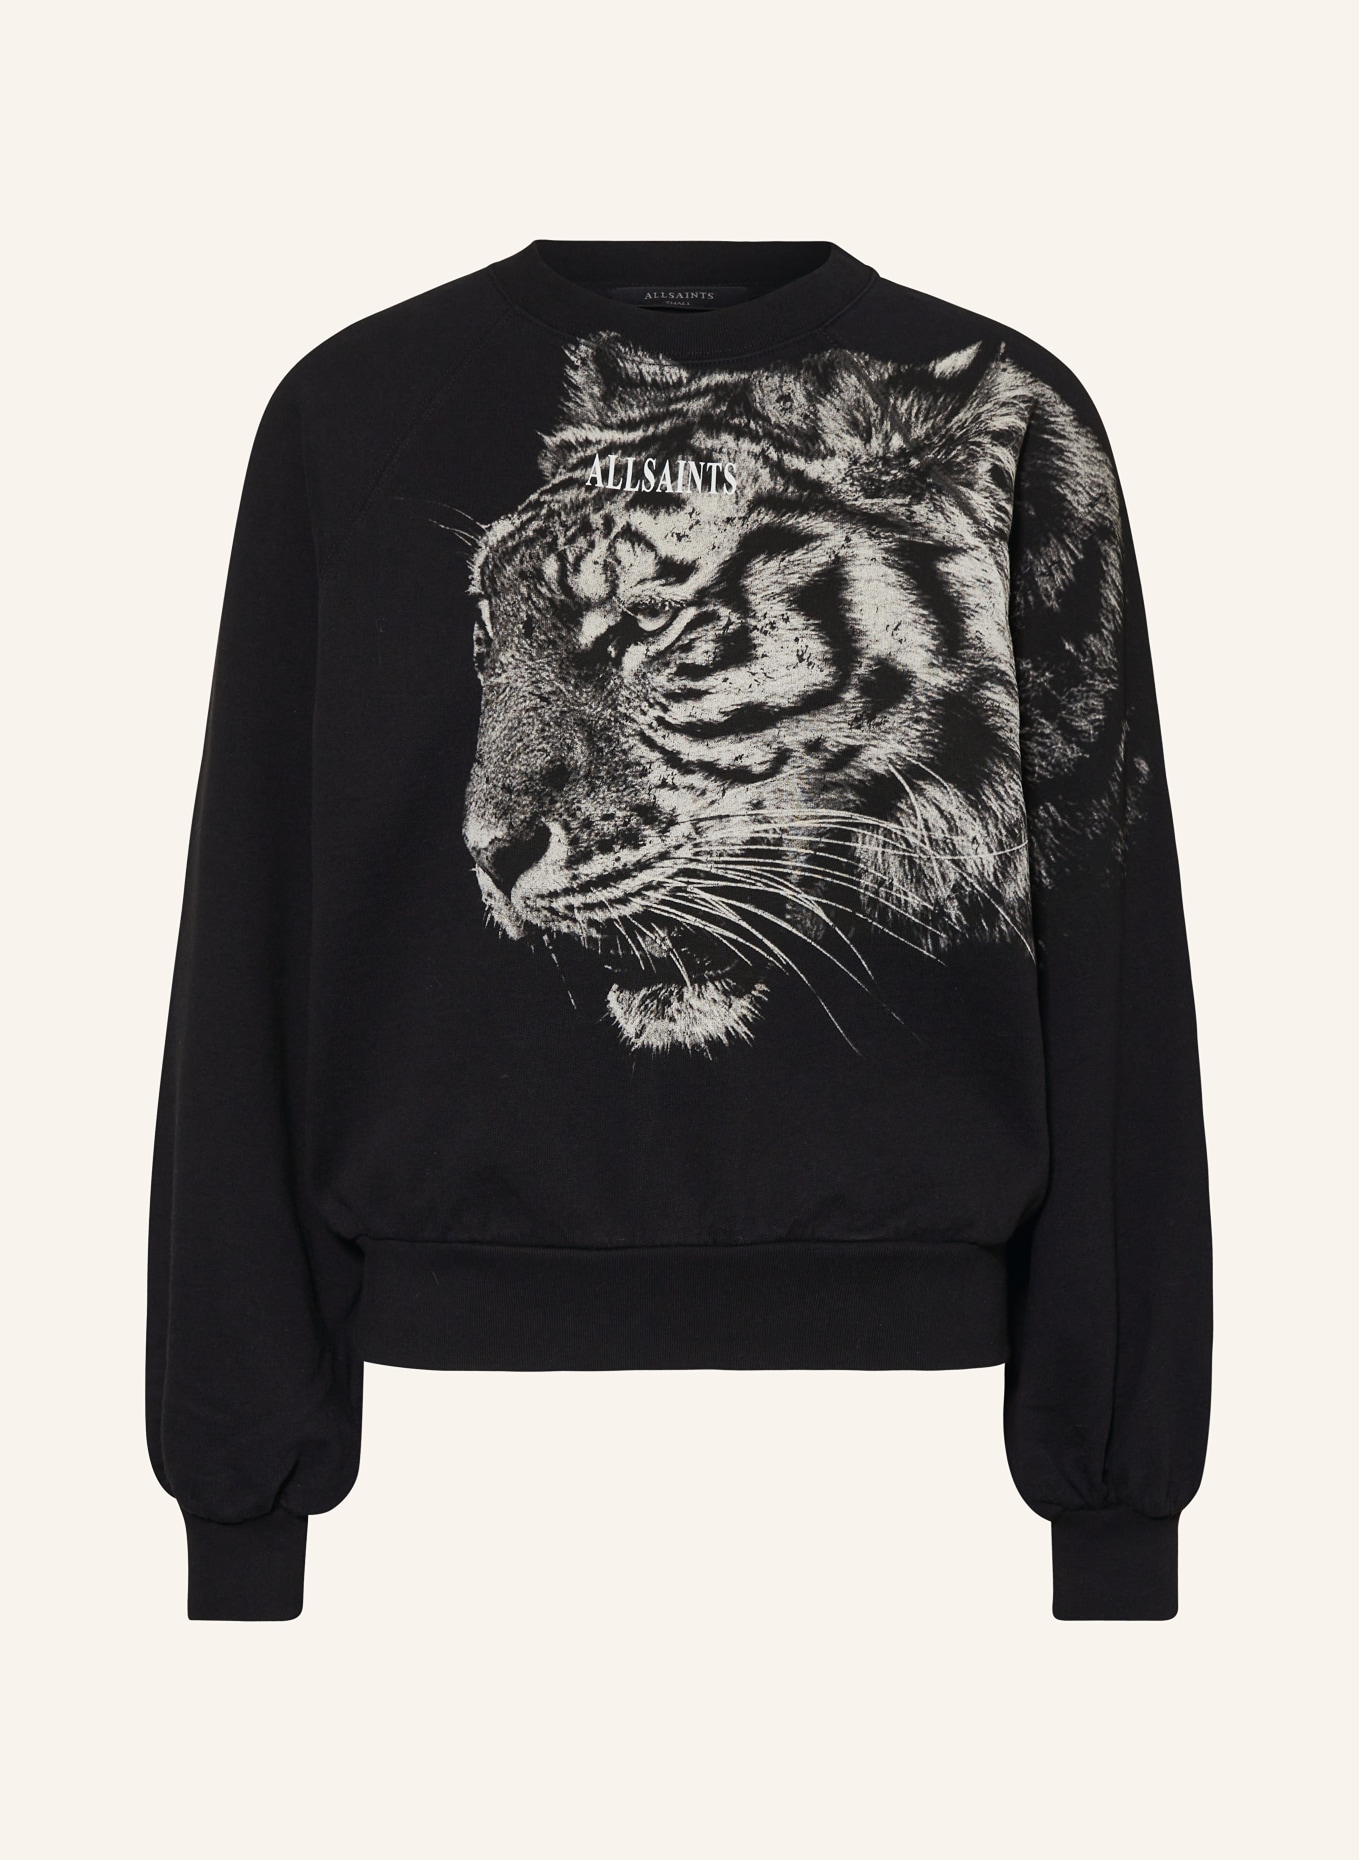 ALLSAINTS Sweatshirt TIGRESS CYGNI with cut-out, Color: BLACK/ WHITE/ GRAY (Image 1)